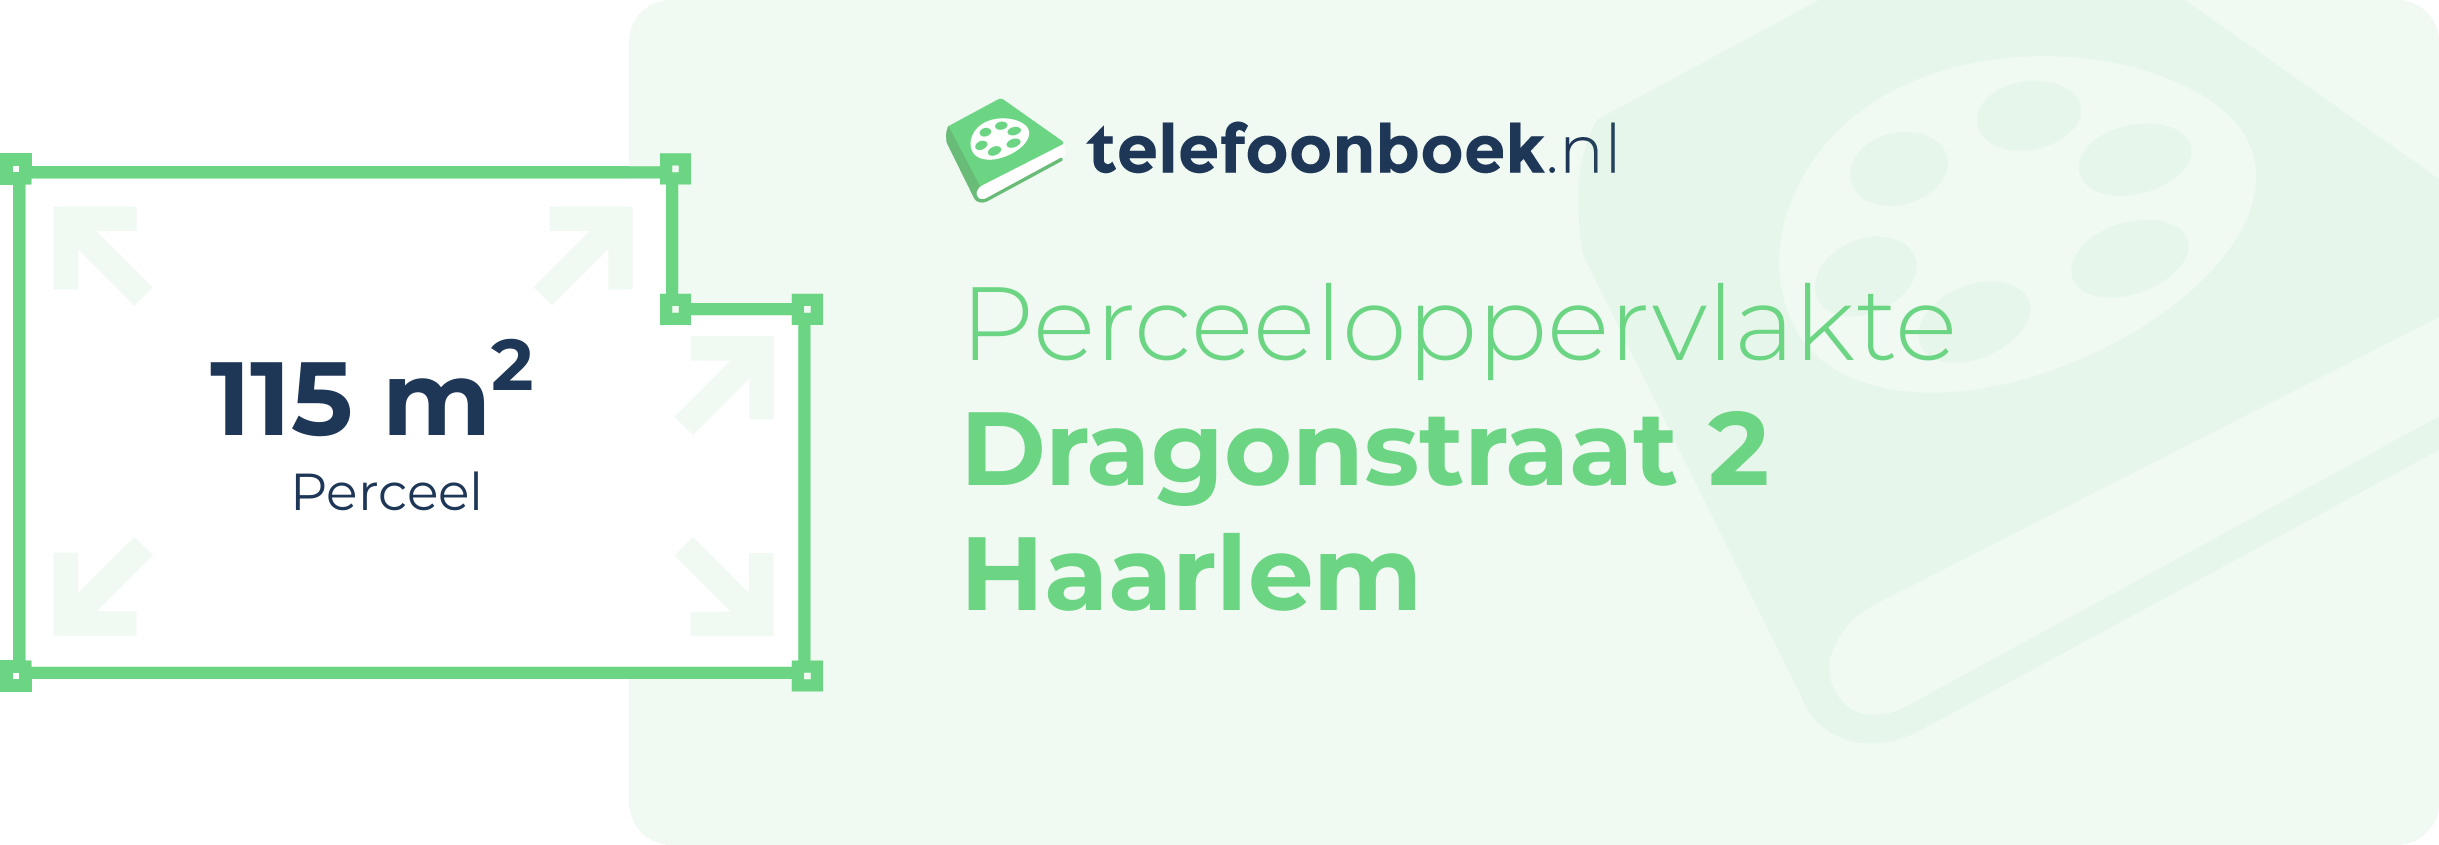 Perceeloppervlakte Dragonstraat 2 Haarlem